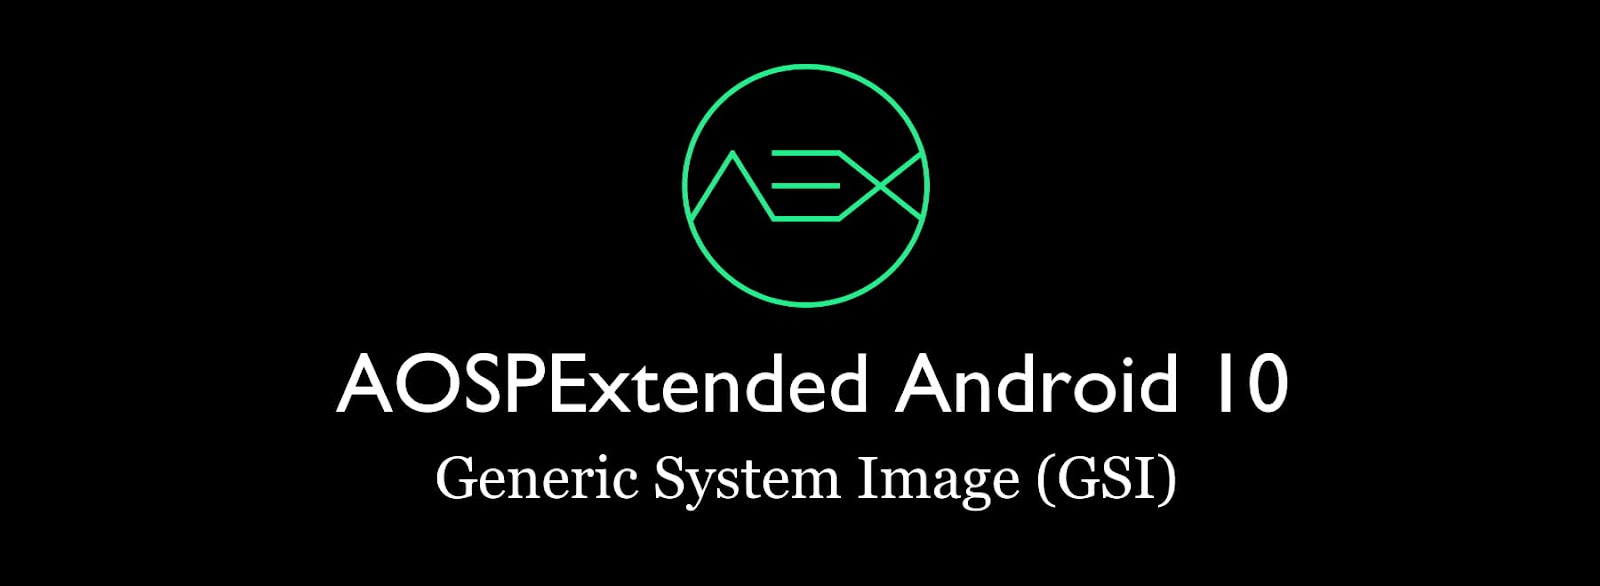 AOSPExtended Android 10 GSI banner illustration